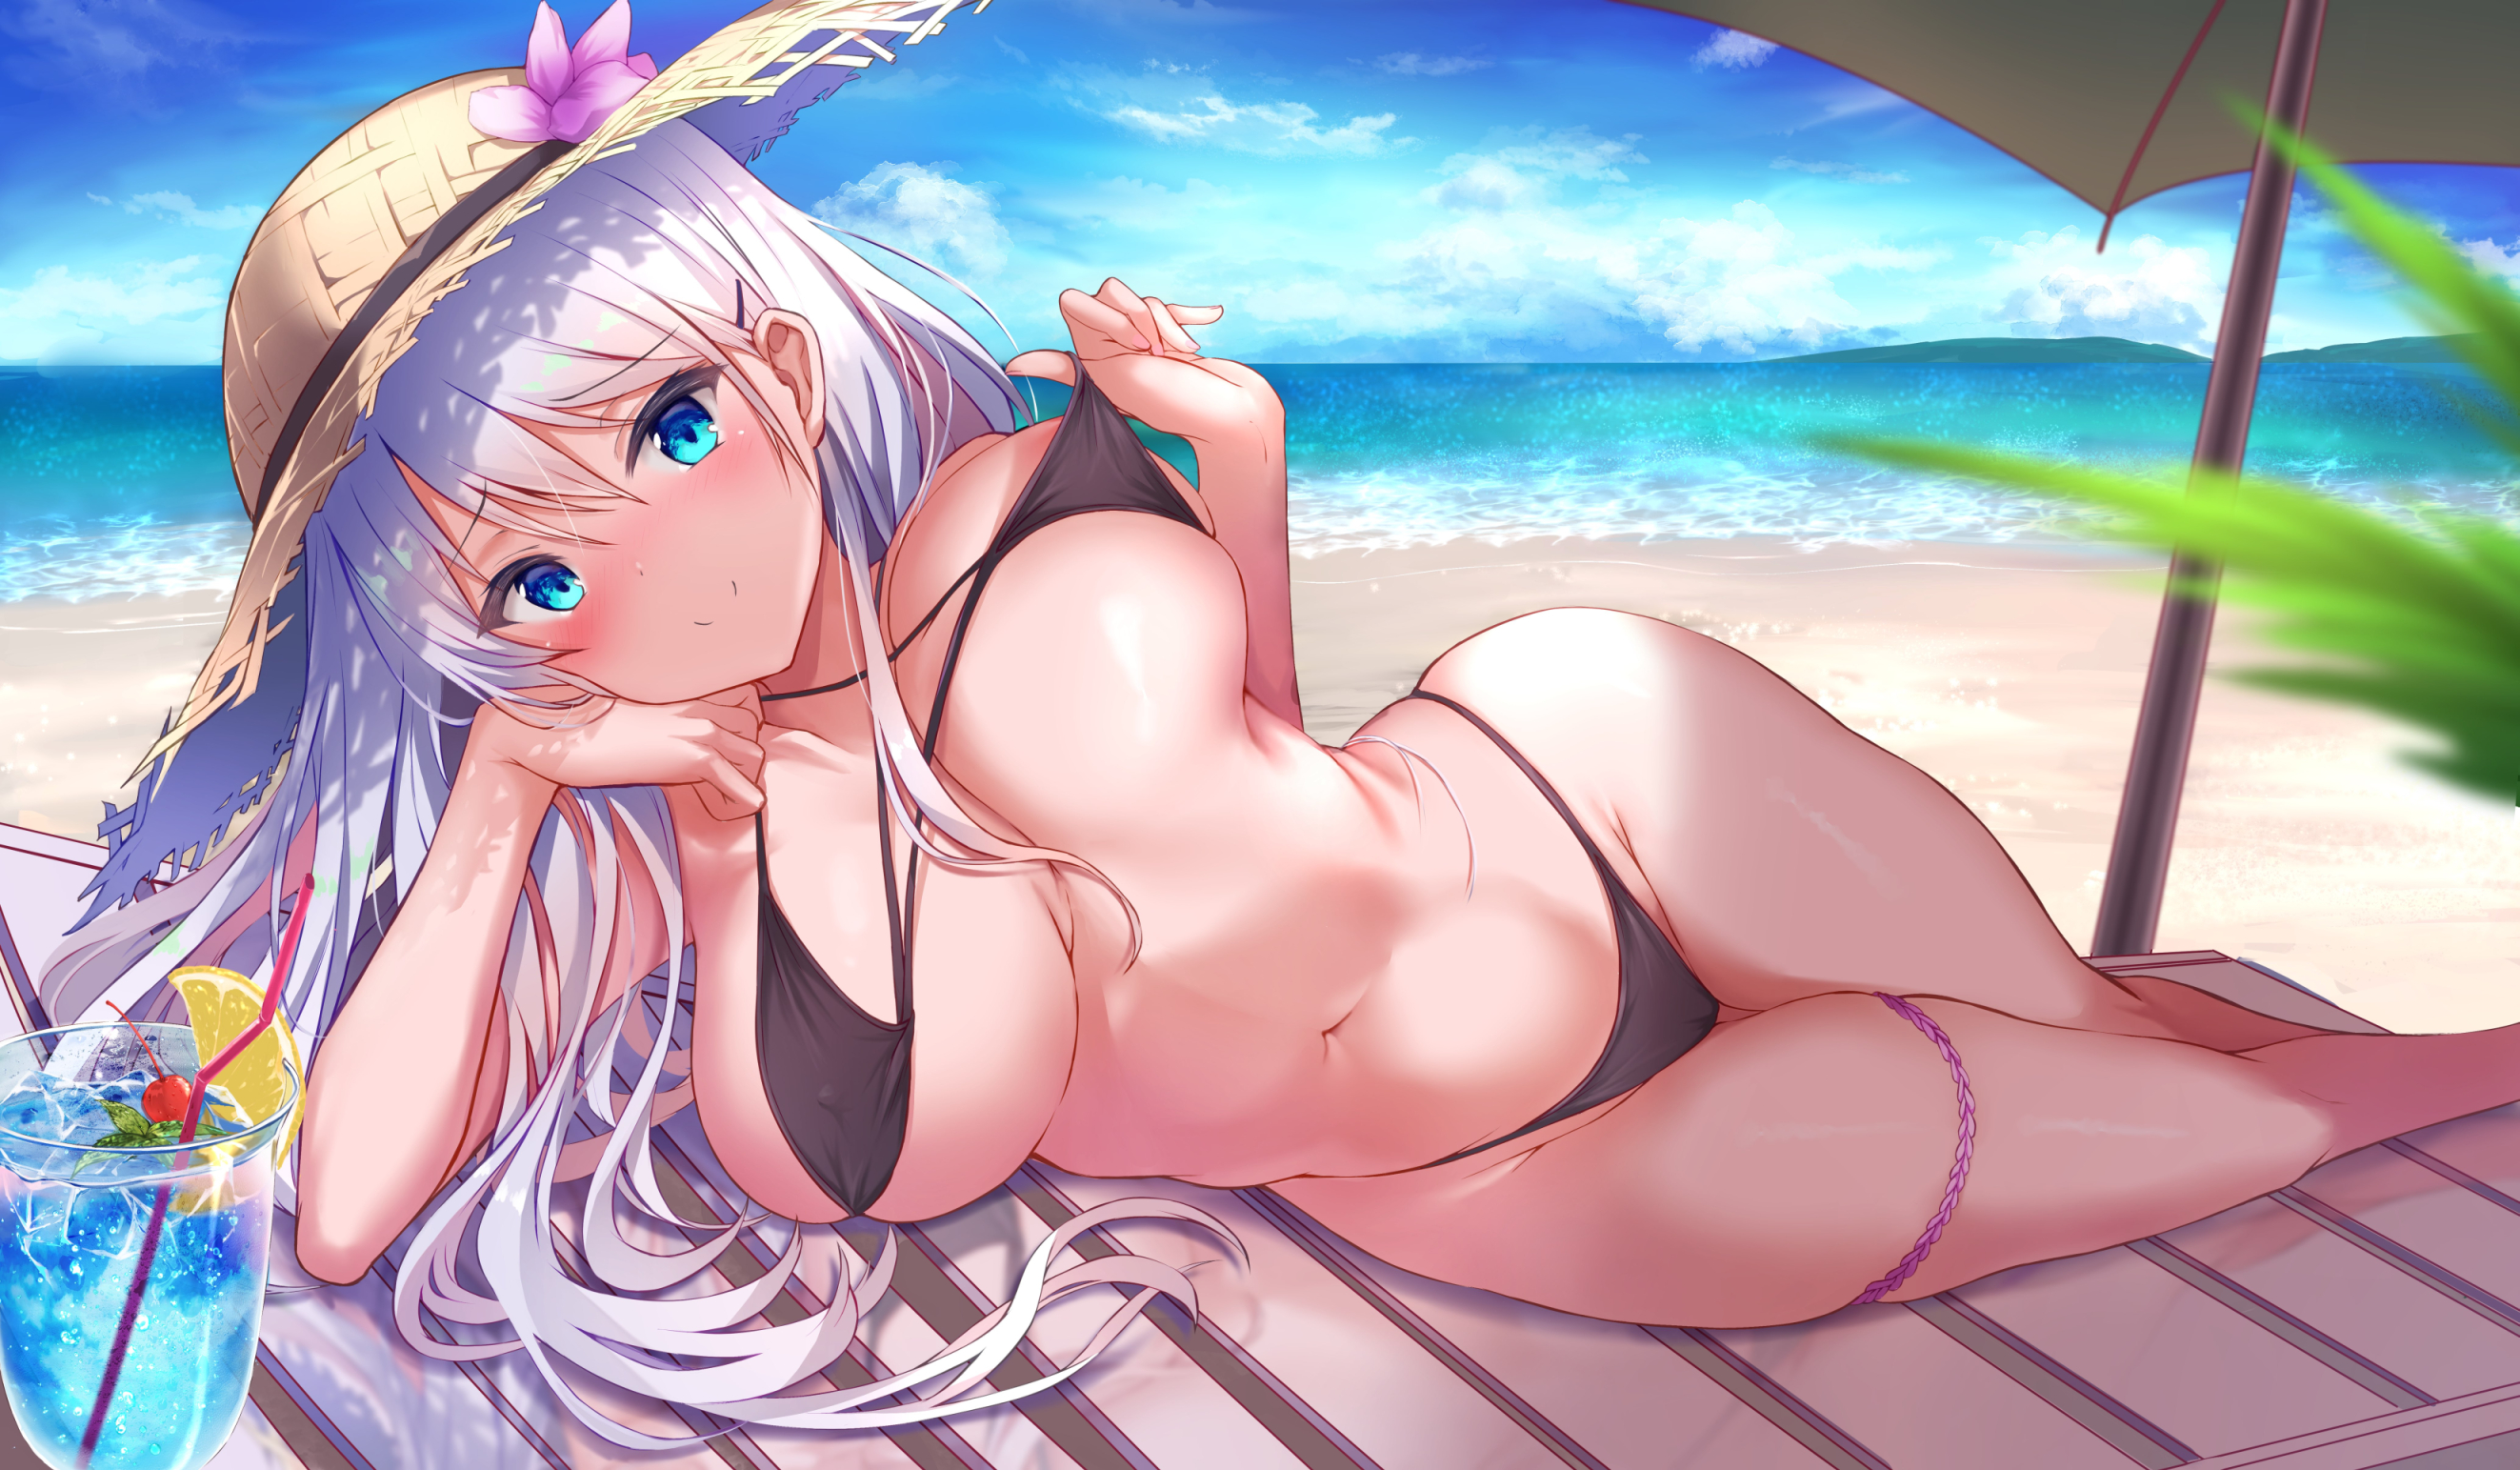 Anime 2646x1543 anime anime girls bikini big boobs pulling clothing straw hat blue eyes beach water umbrella sand